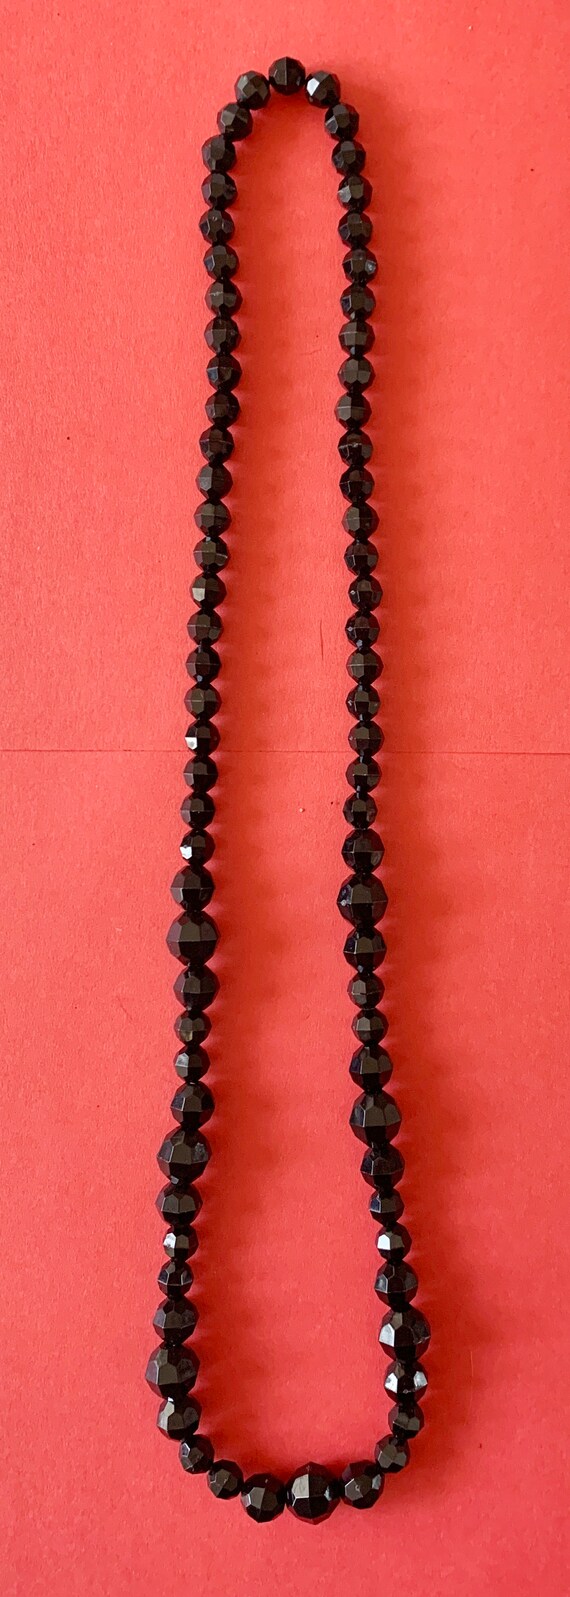 Vintage Black Faceted Bead Necklace